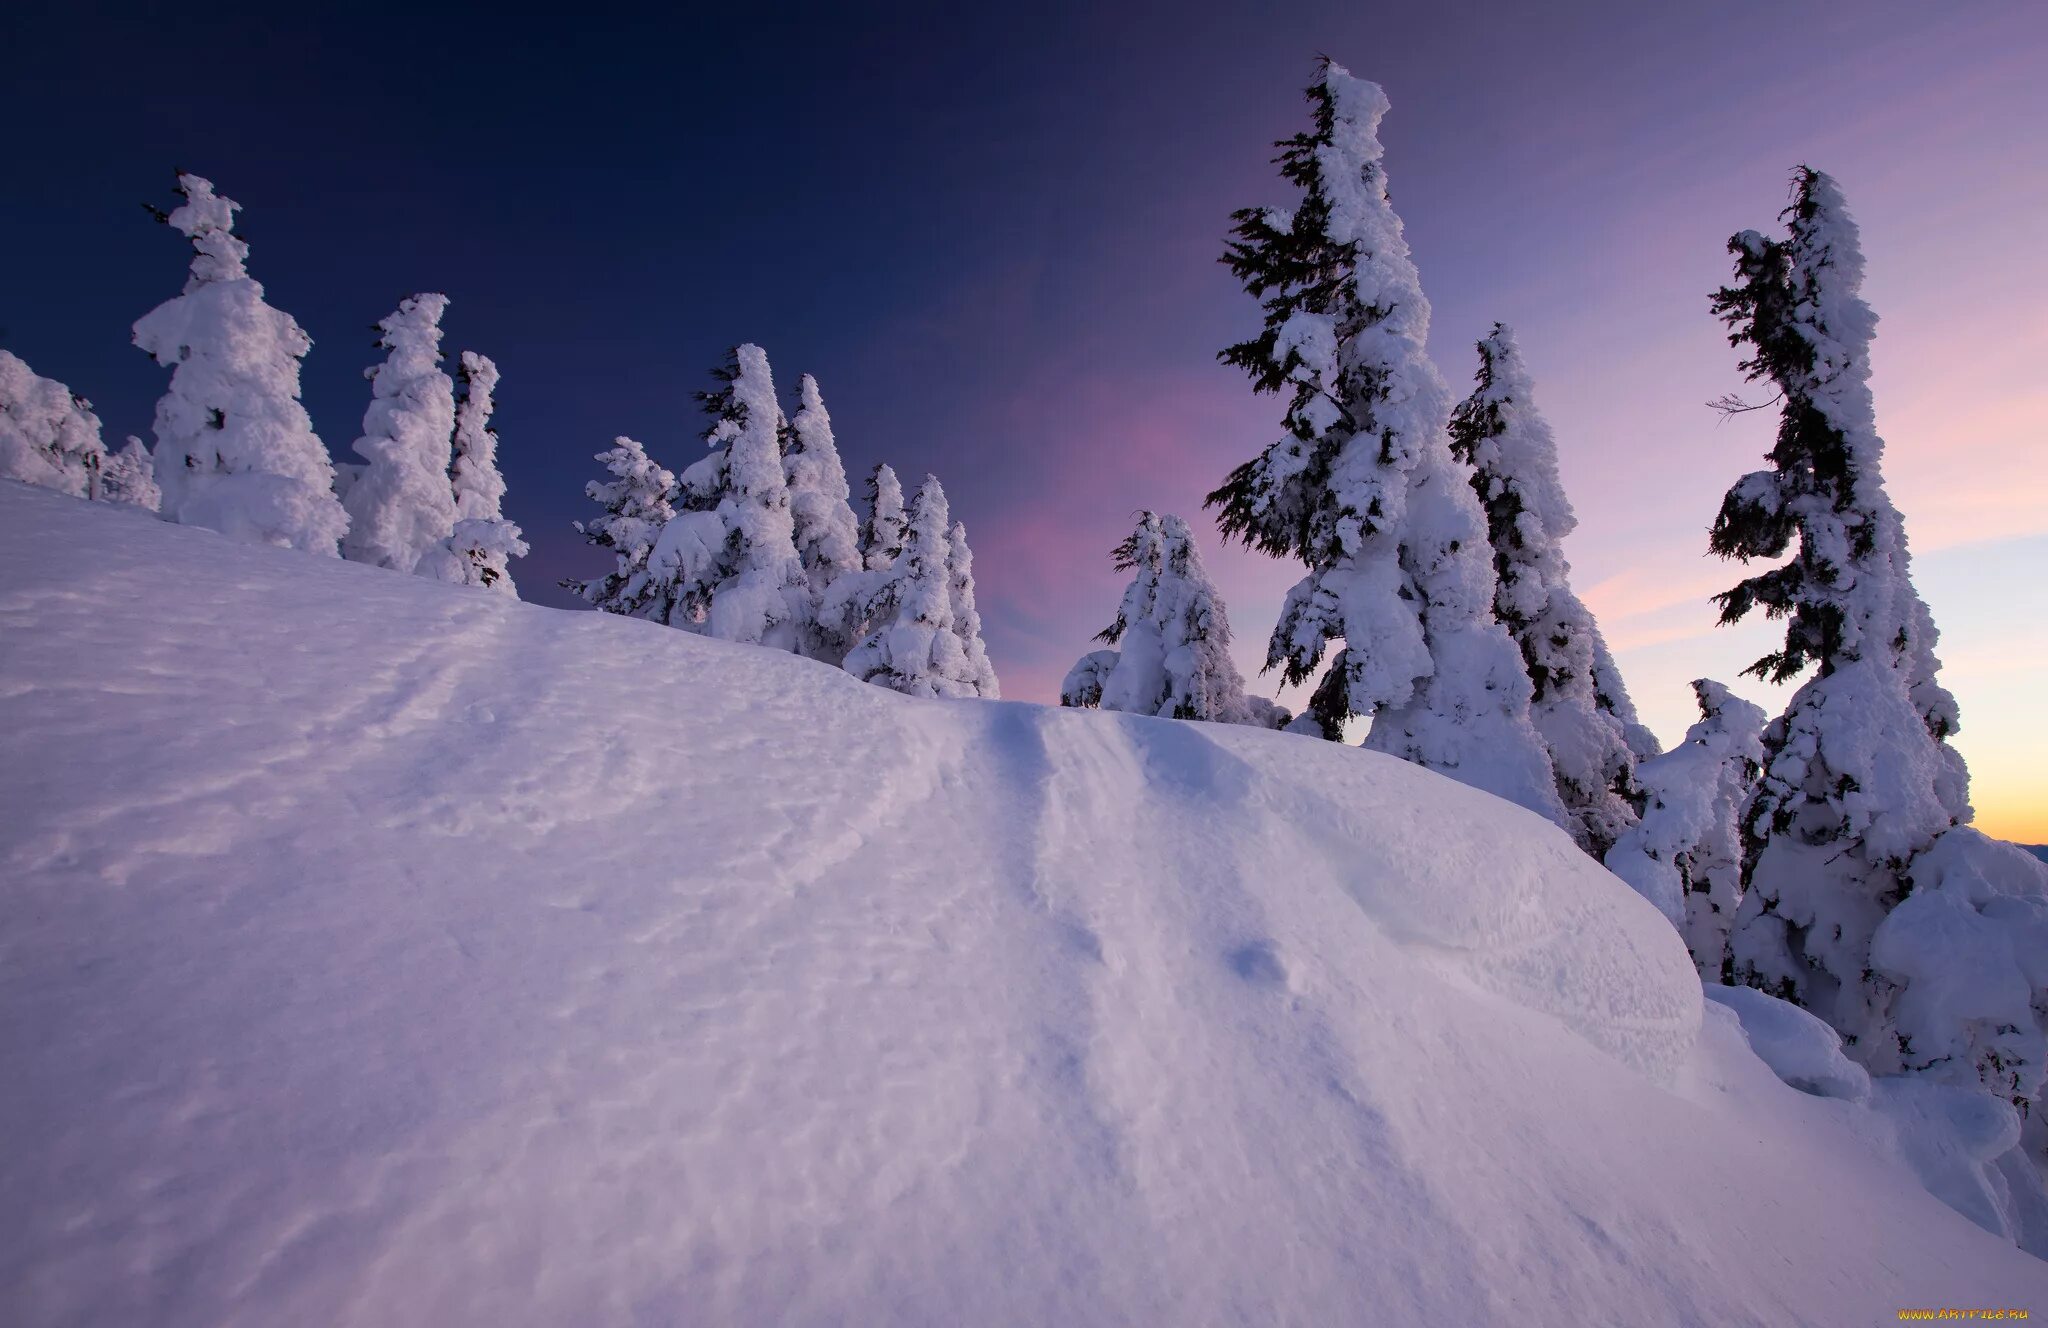 Хай зима. Снежные холмы. Снег, зима, закат, склон. Картинка красивая снежные холмы зимой. Фото природы снег, закат,, склон.